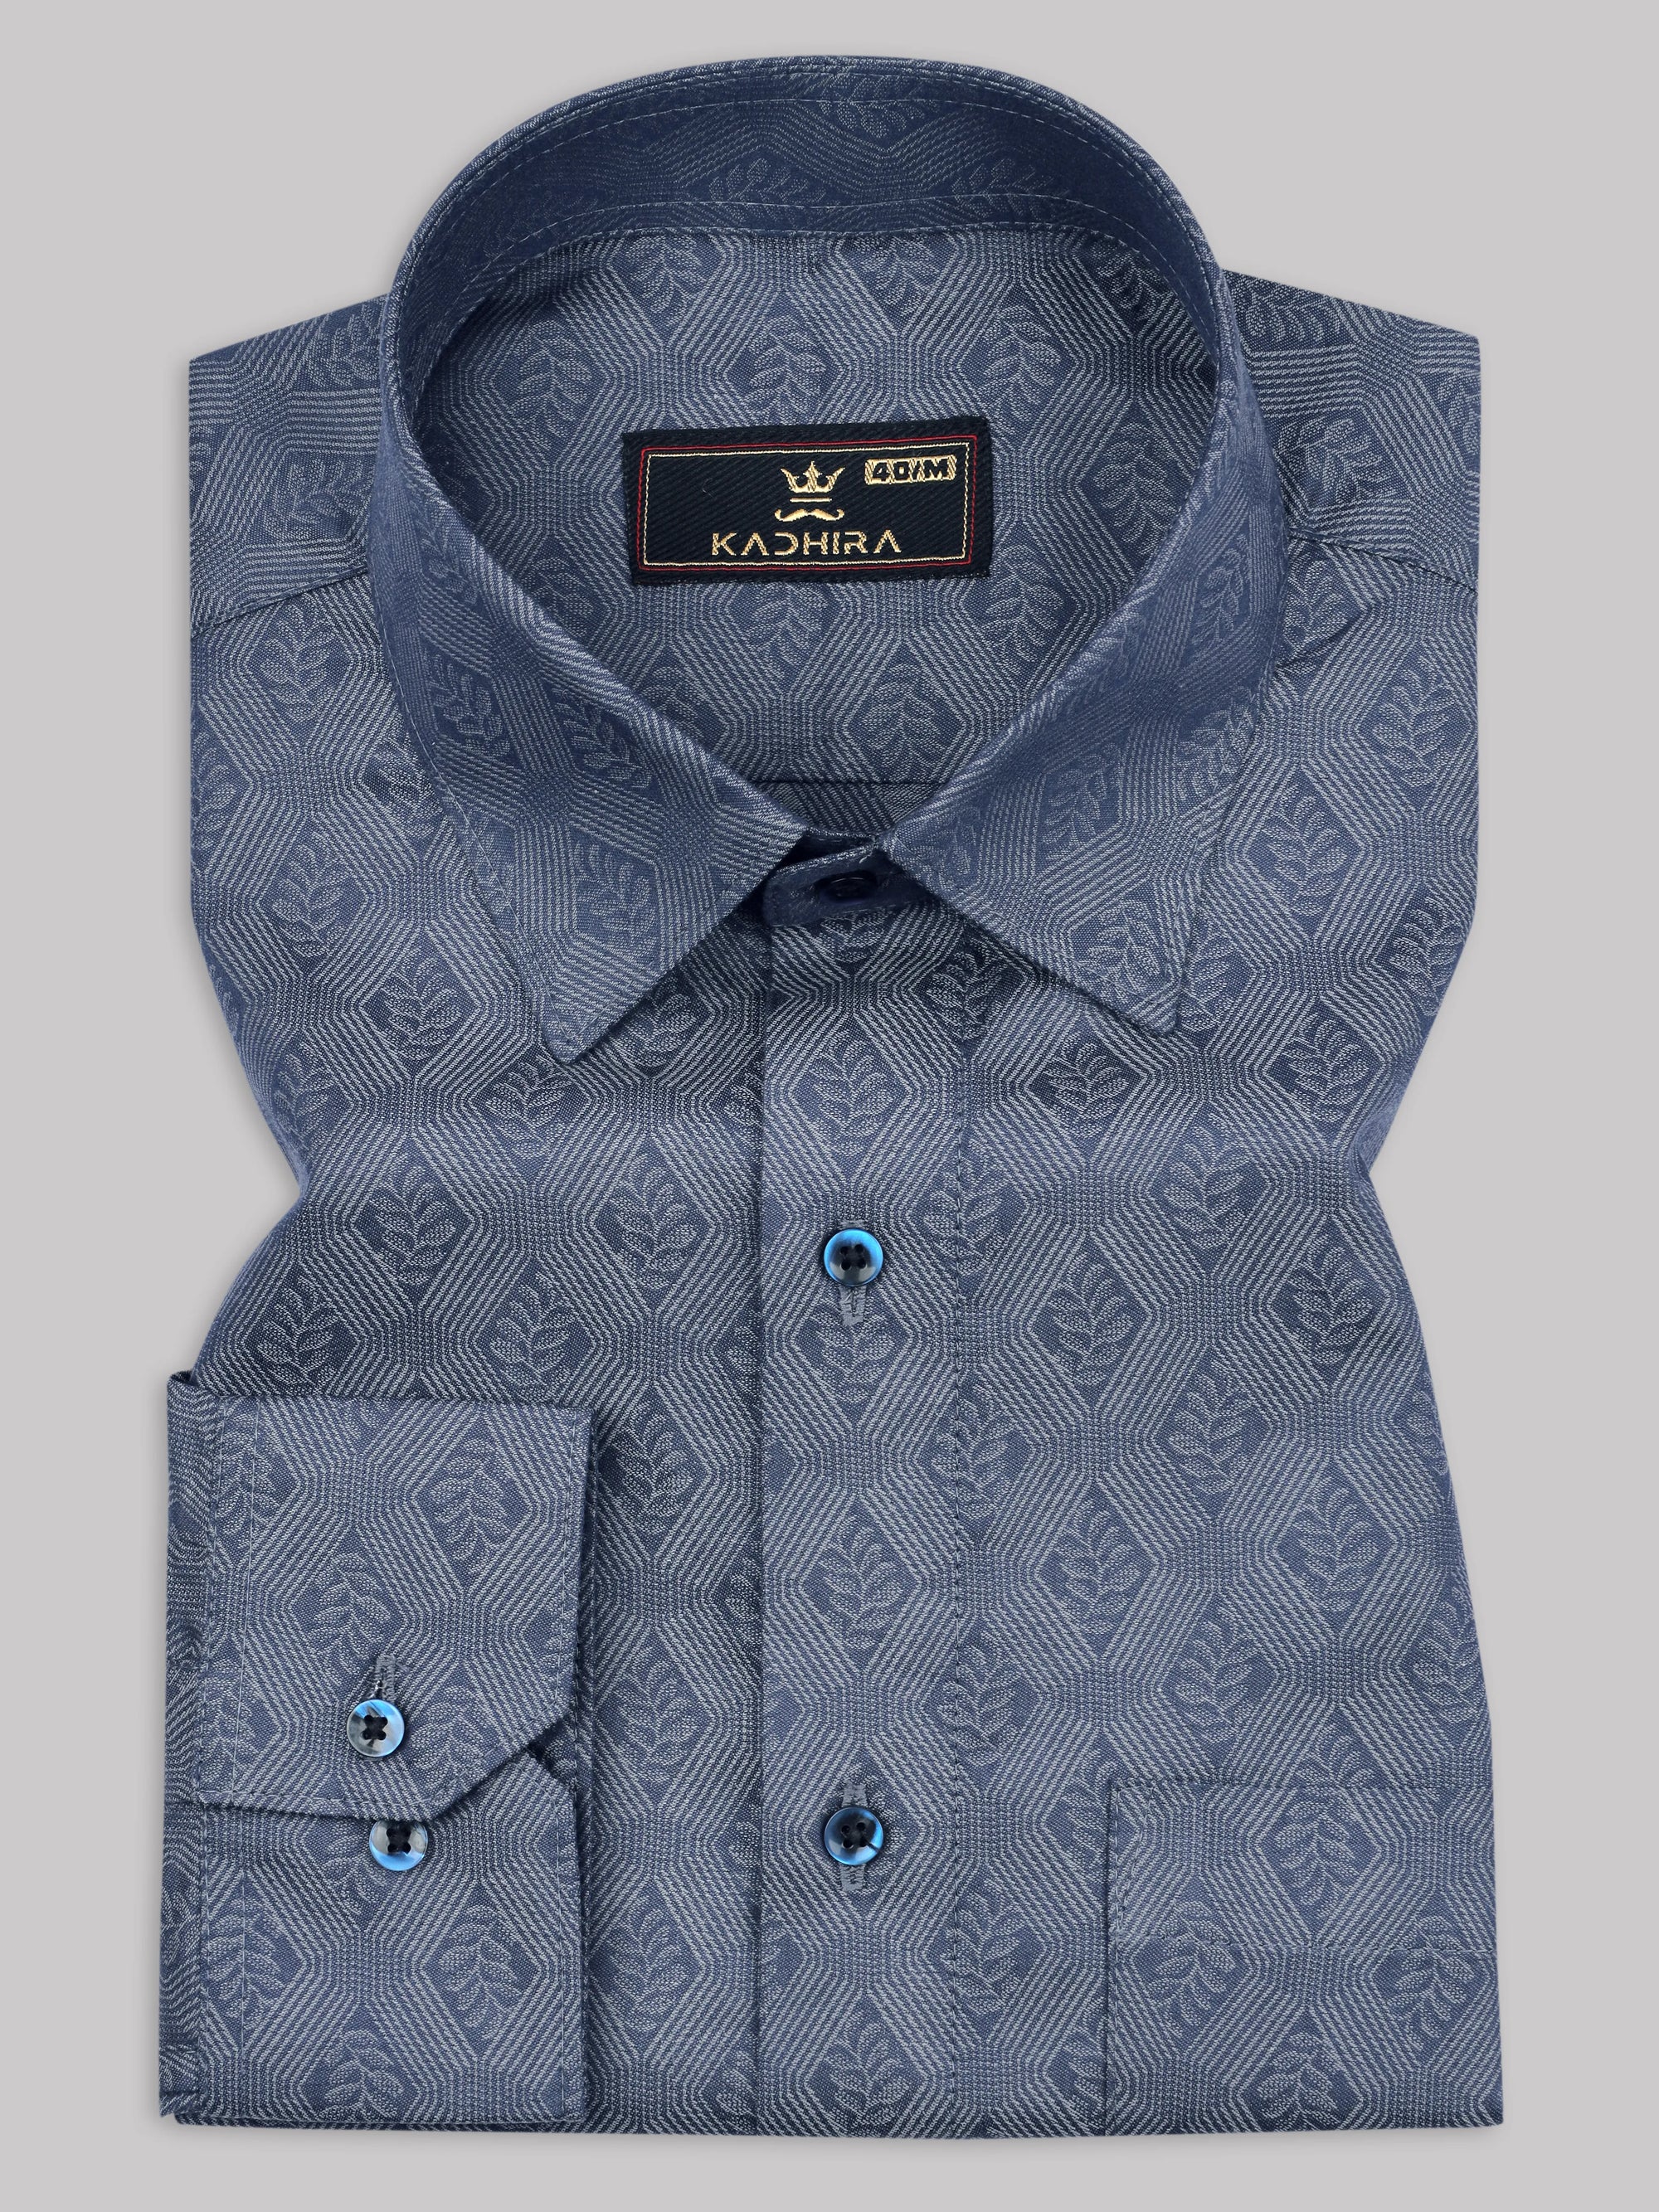 Slate Blue Seamless Jacquard Premium Cotton Shirt